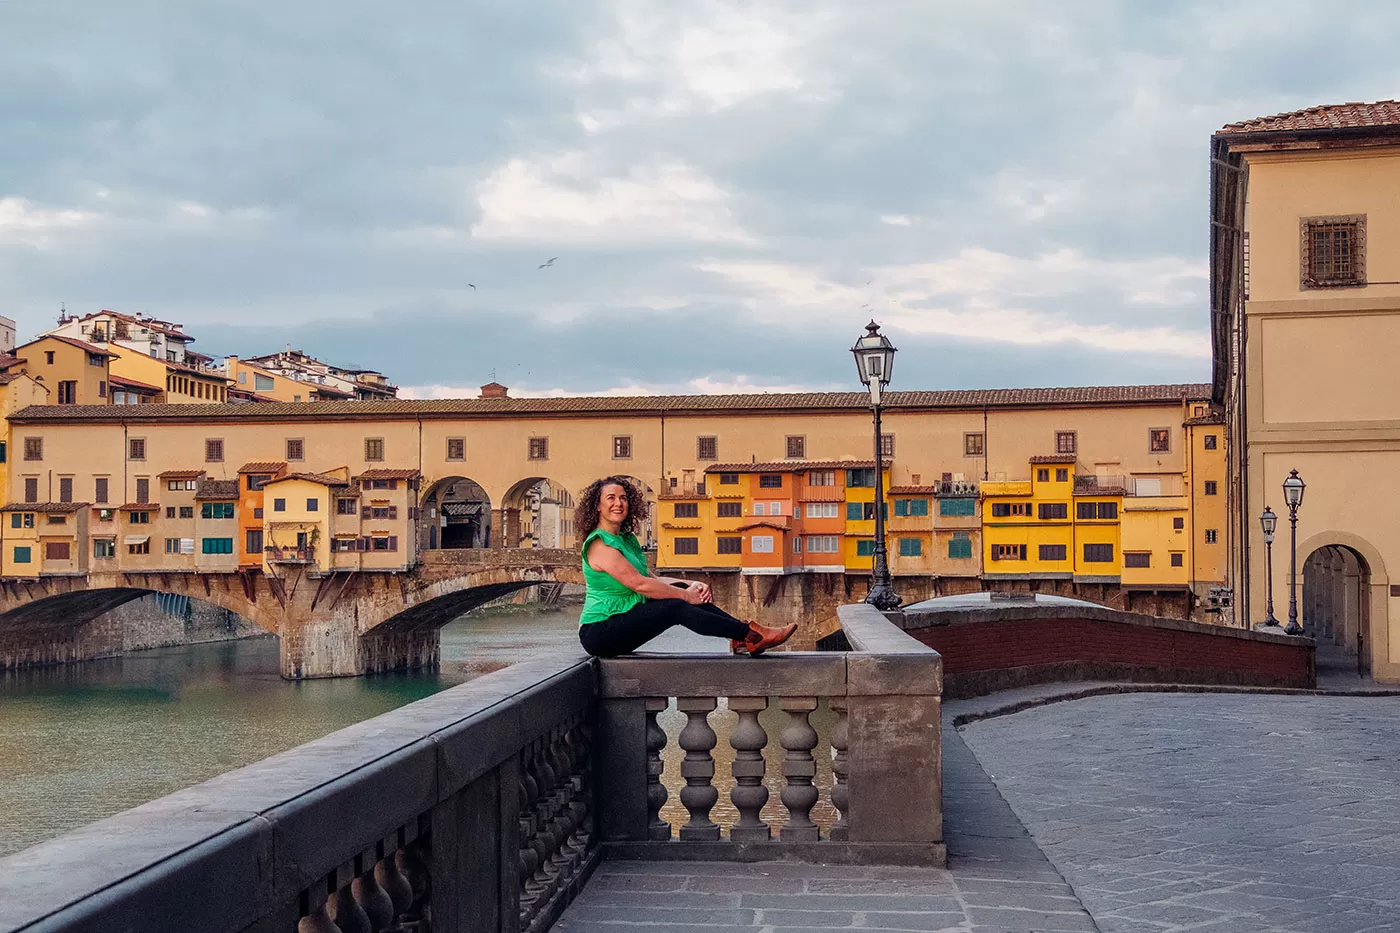 Florence tips - Ponte Vecchio - No Crowds